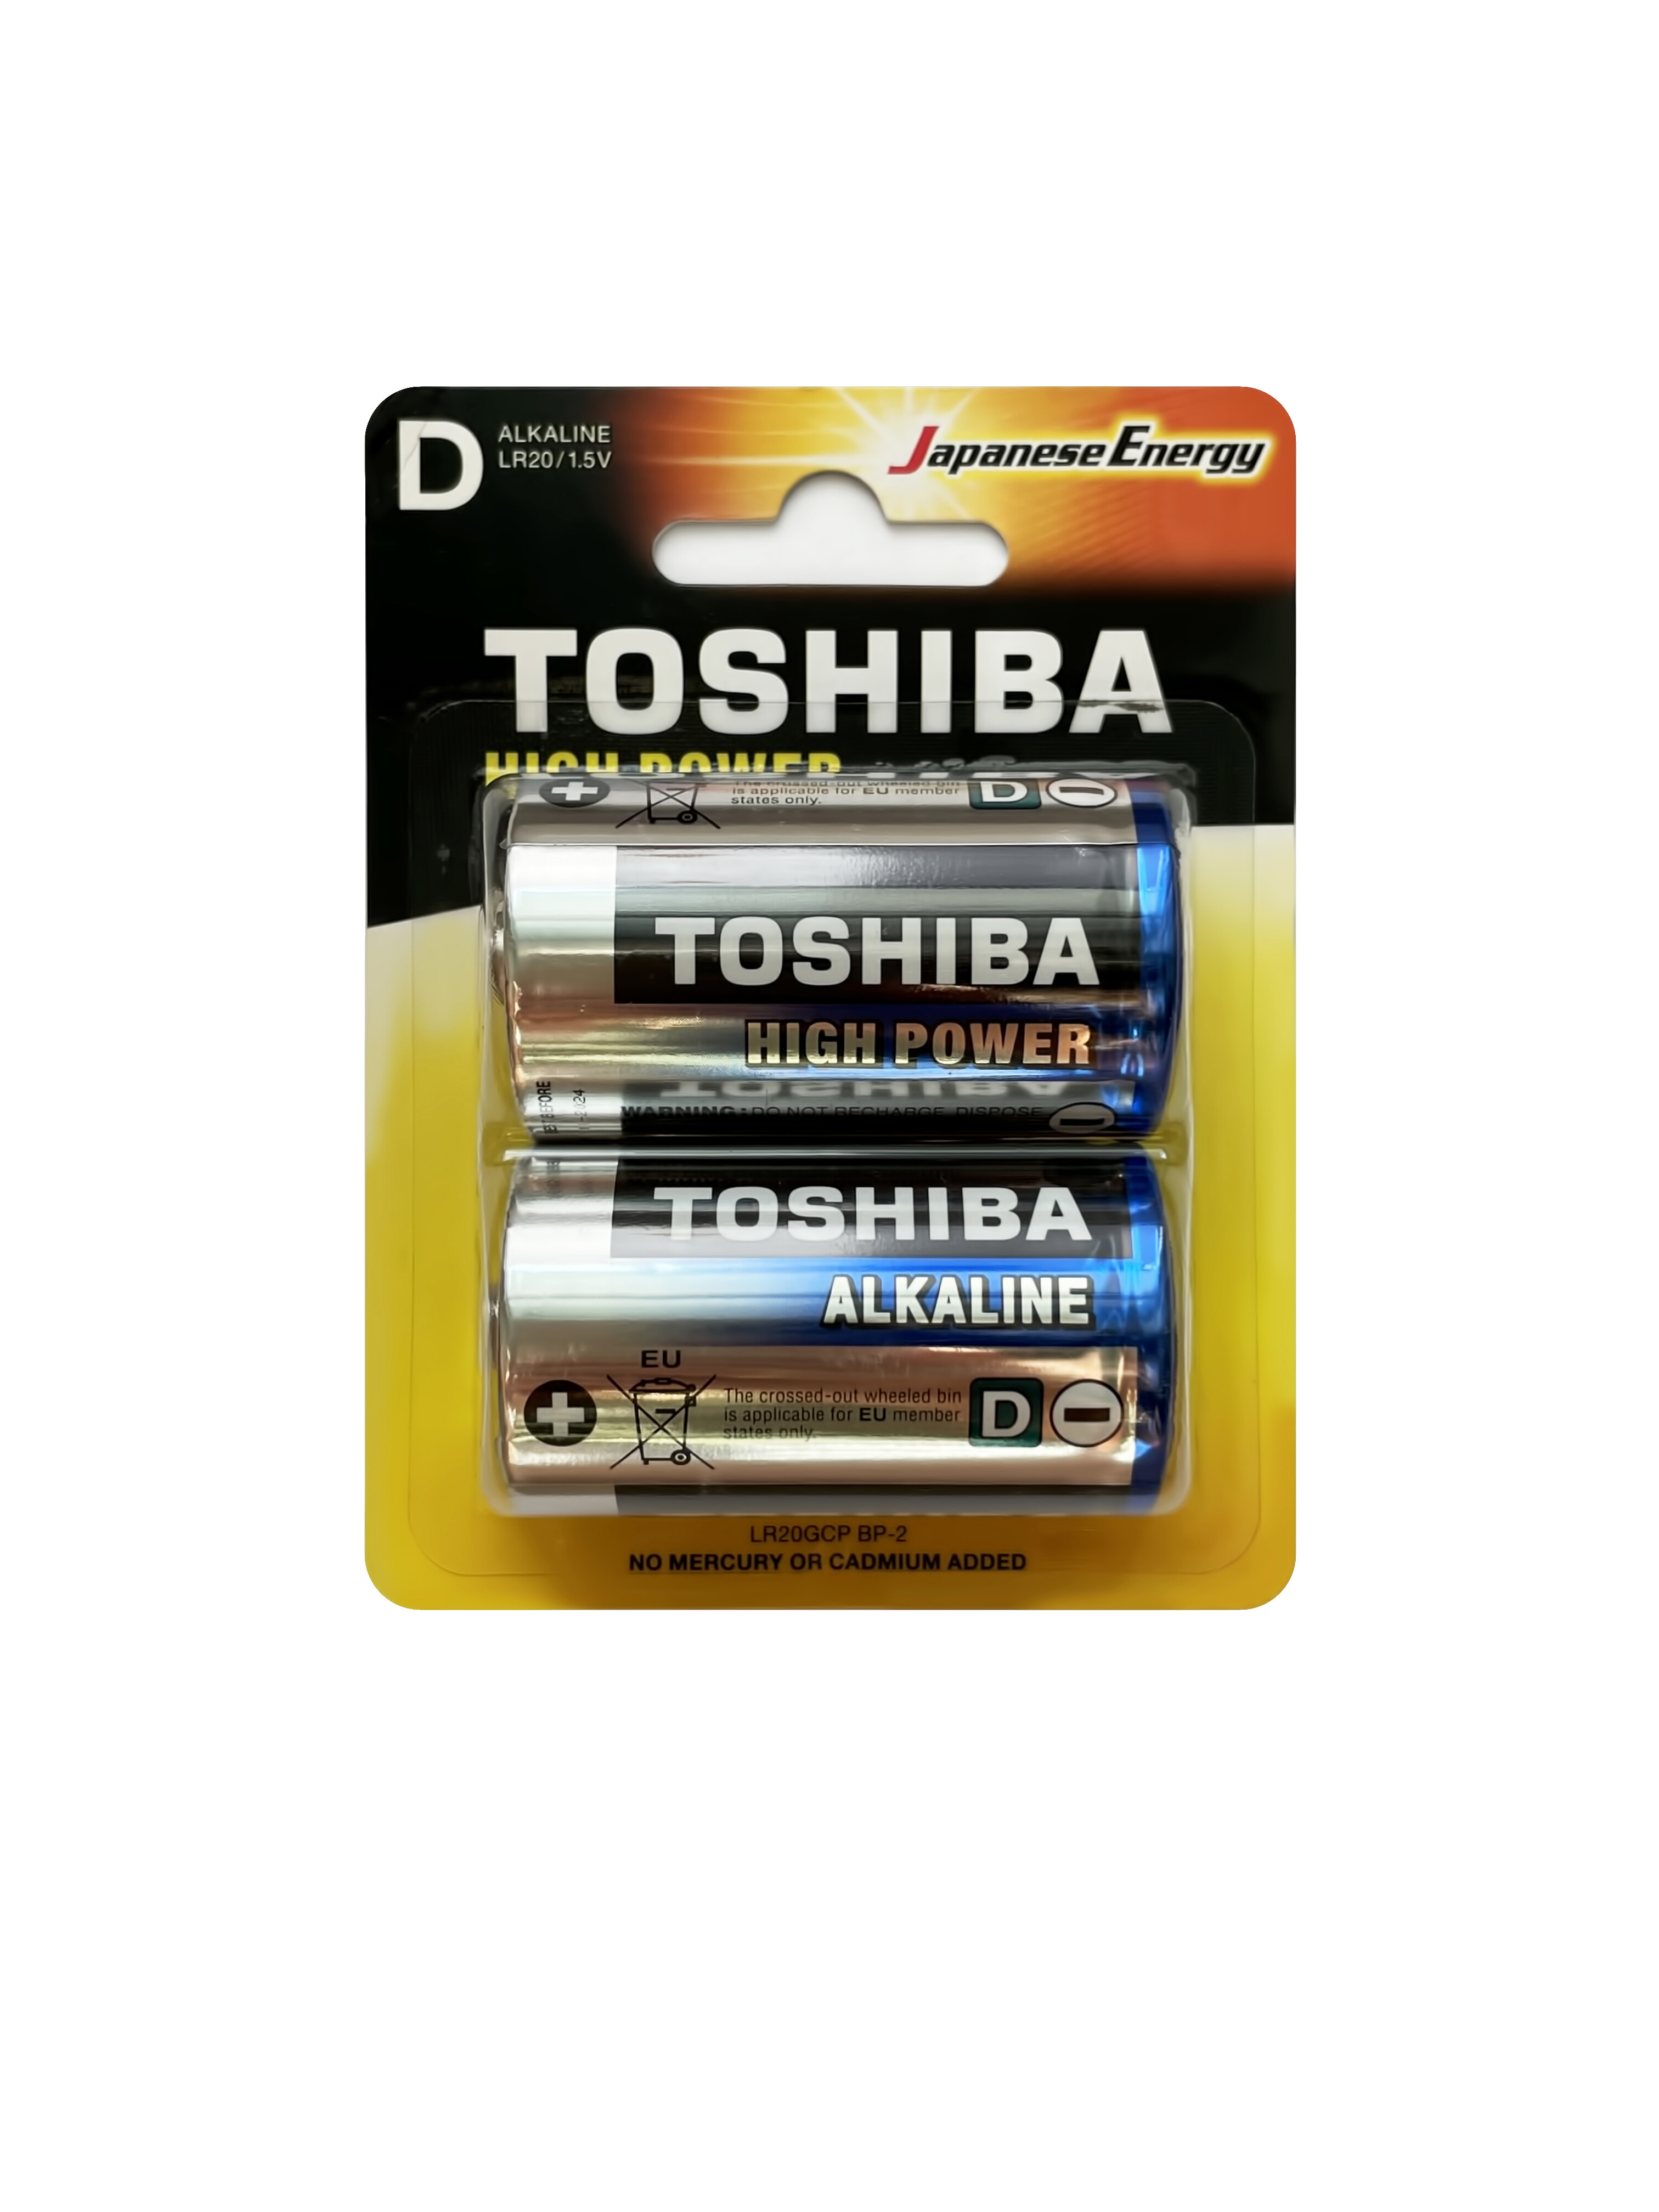 Батарейки Toshiba LR20 щелочные (alkaline) БОЧКА High Power (2шт) D 1,5V батарейки toshiba lr14 щелочные alkaline дюймовочка high power 2шт c 1 5v